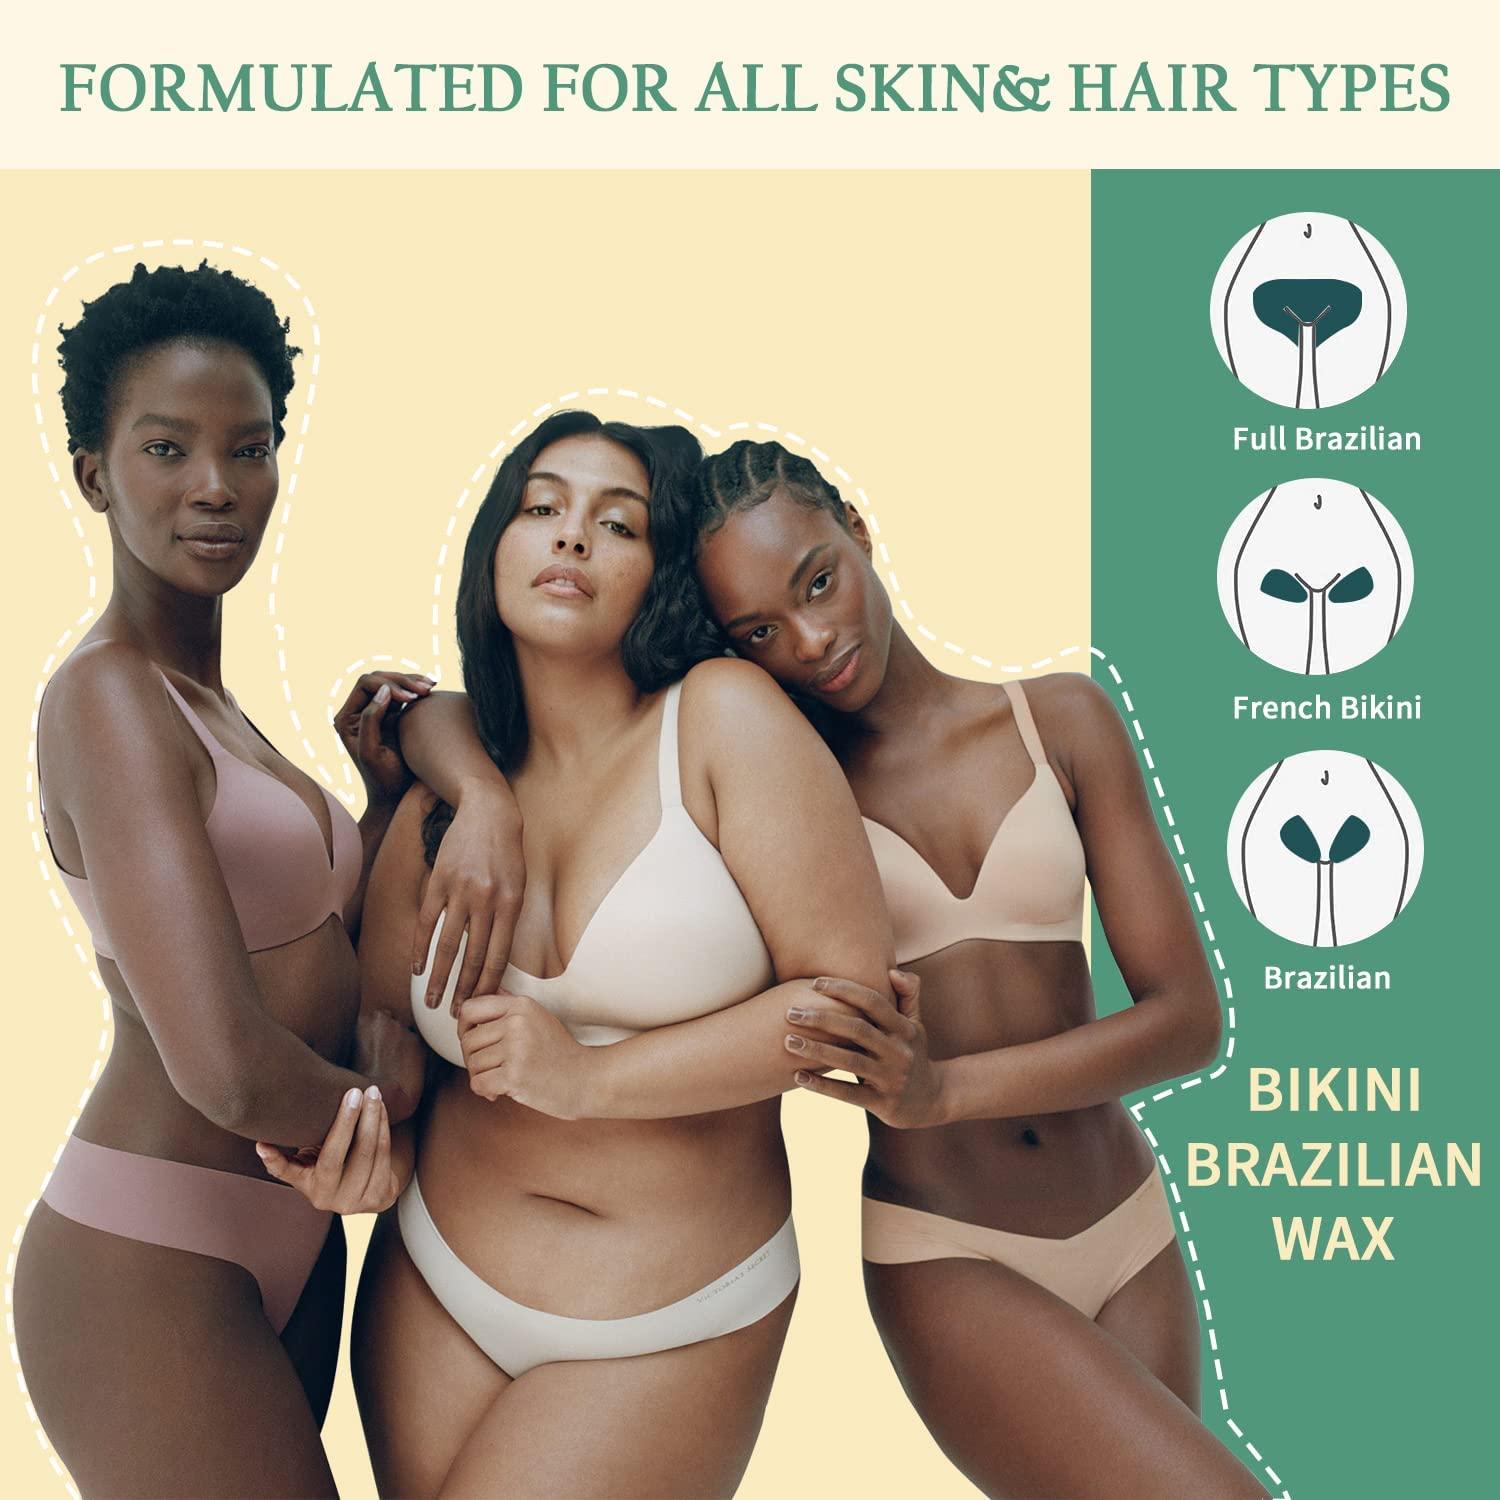 Maxpearl Digital Waxing Kit - Women Men Hard Wax Melt Warmer Kit for Hair  Removal - Sensitive Skin, Eyebrows, Face, Underarms, Brazilian, Bikini, Legs